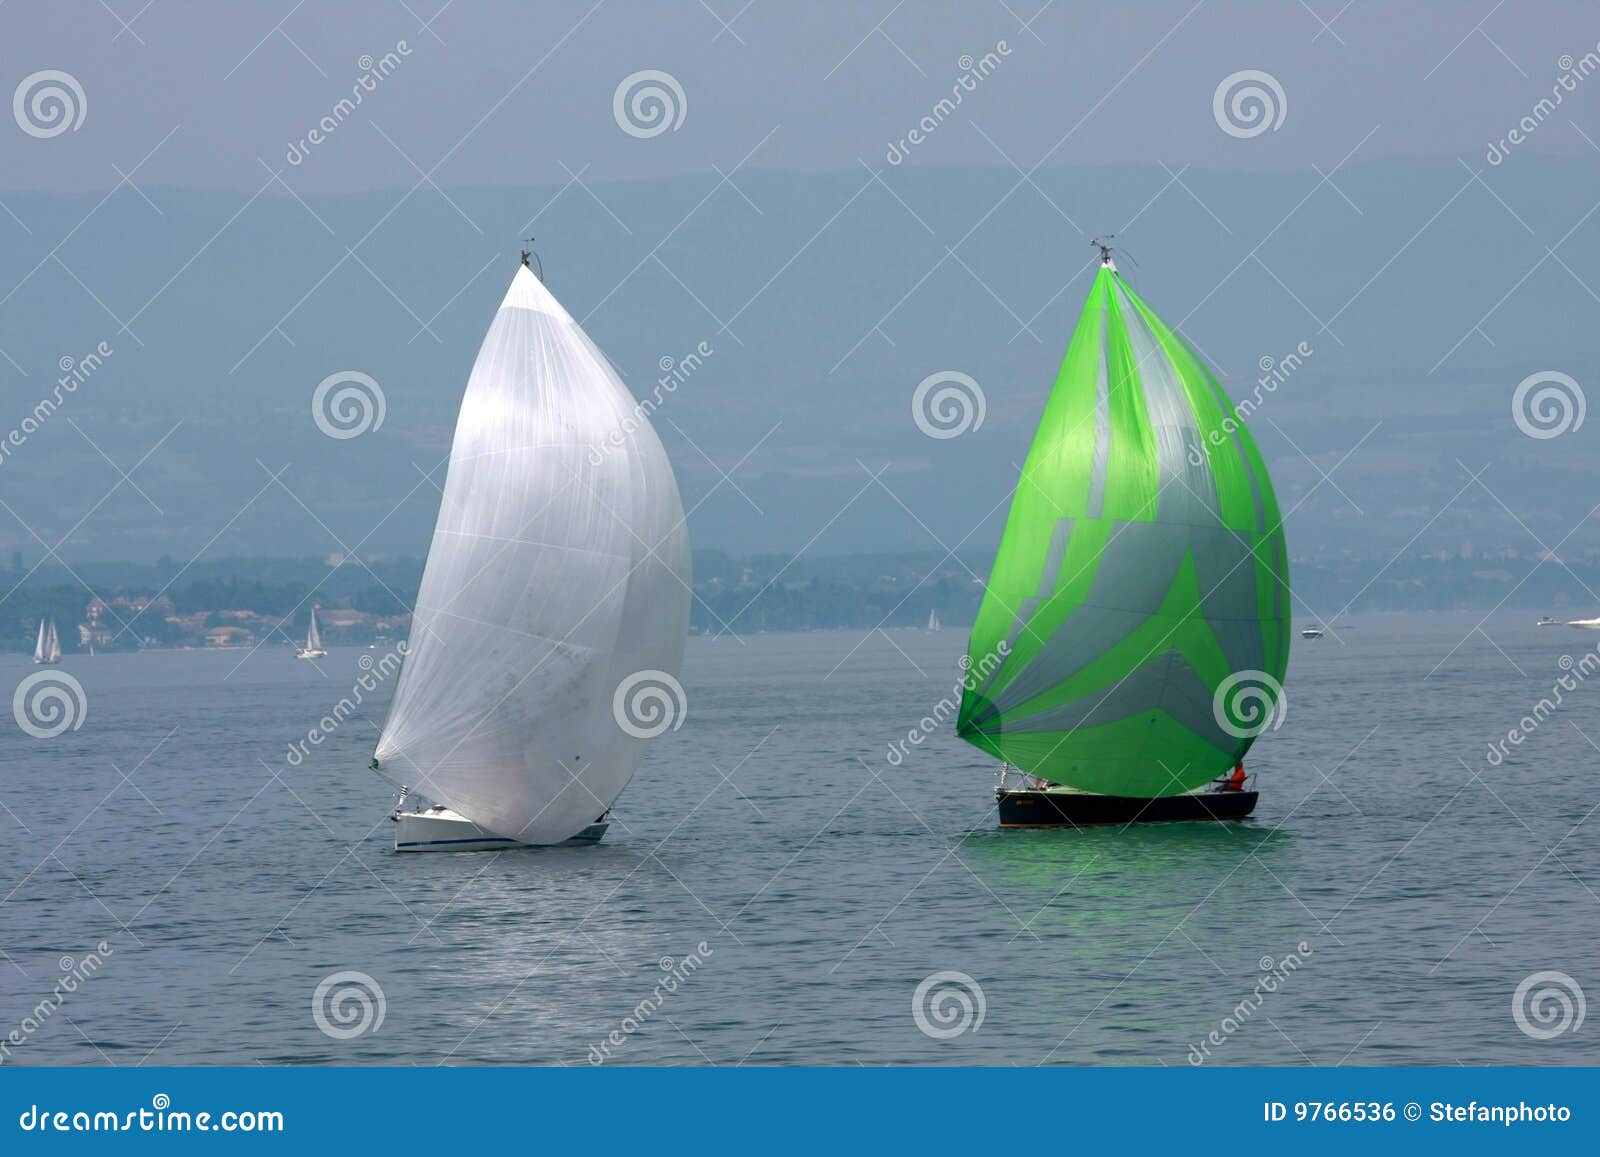 two cruising sailboats